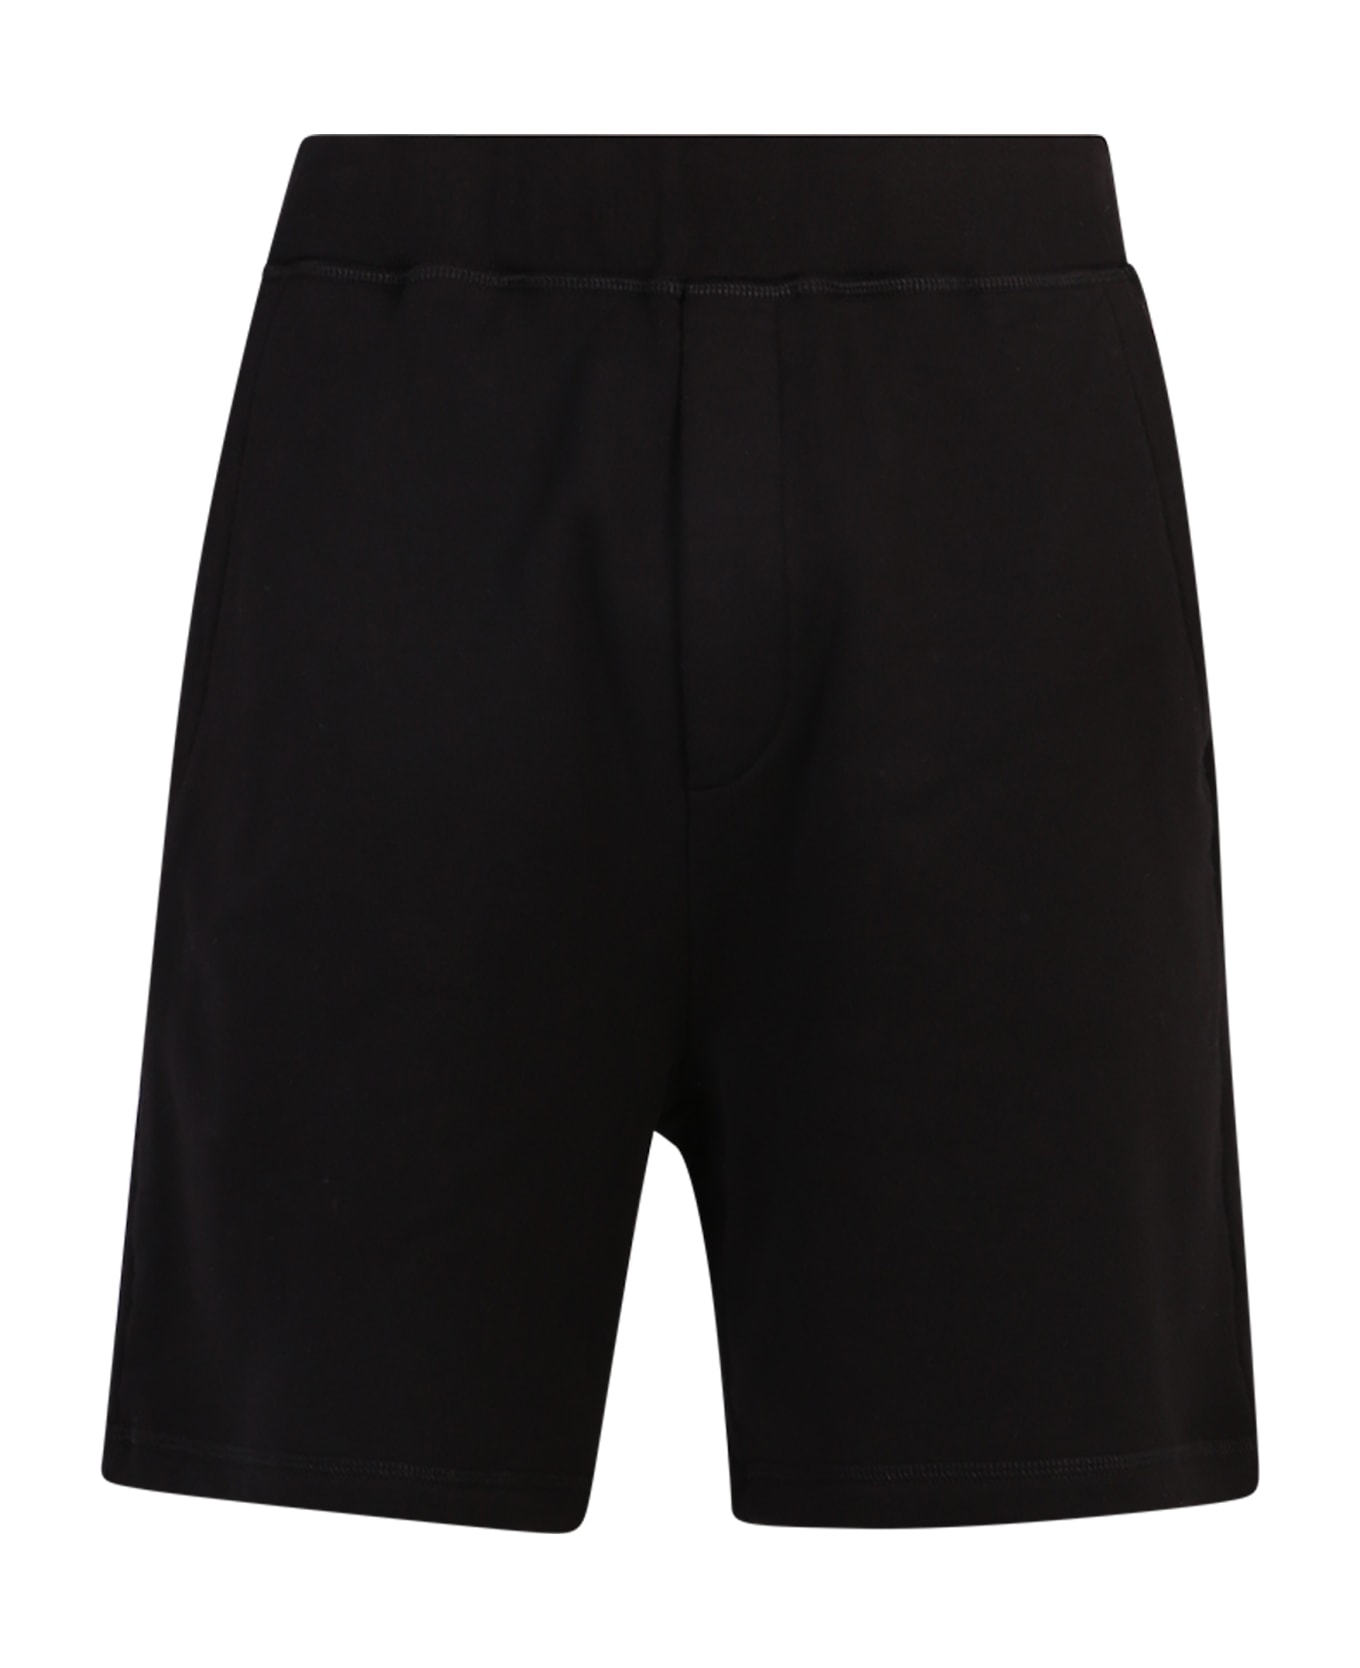 Dsquared2 Printed Bermuda Shorts - Black